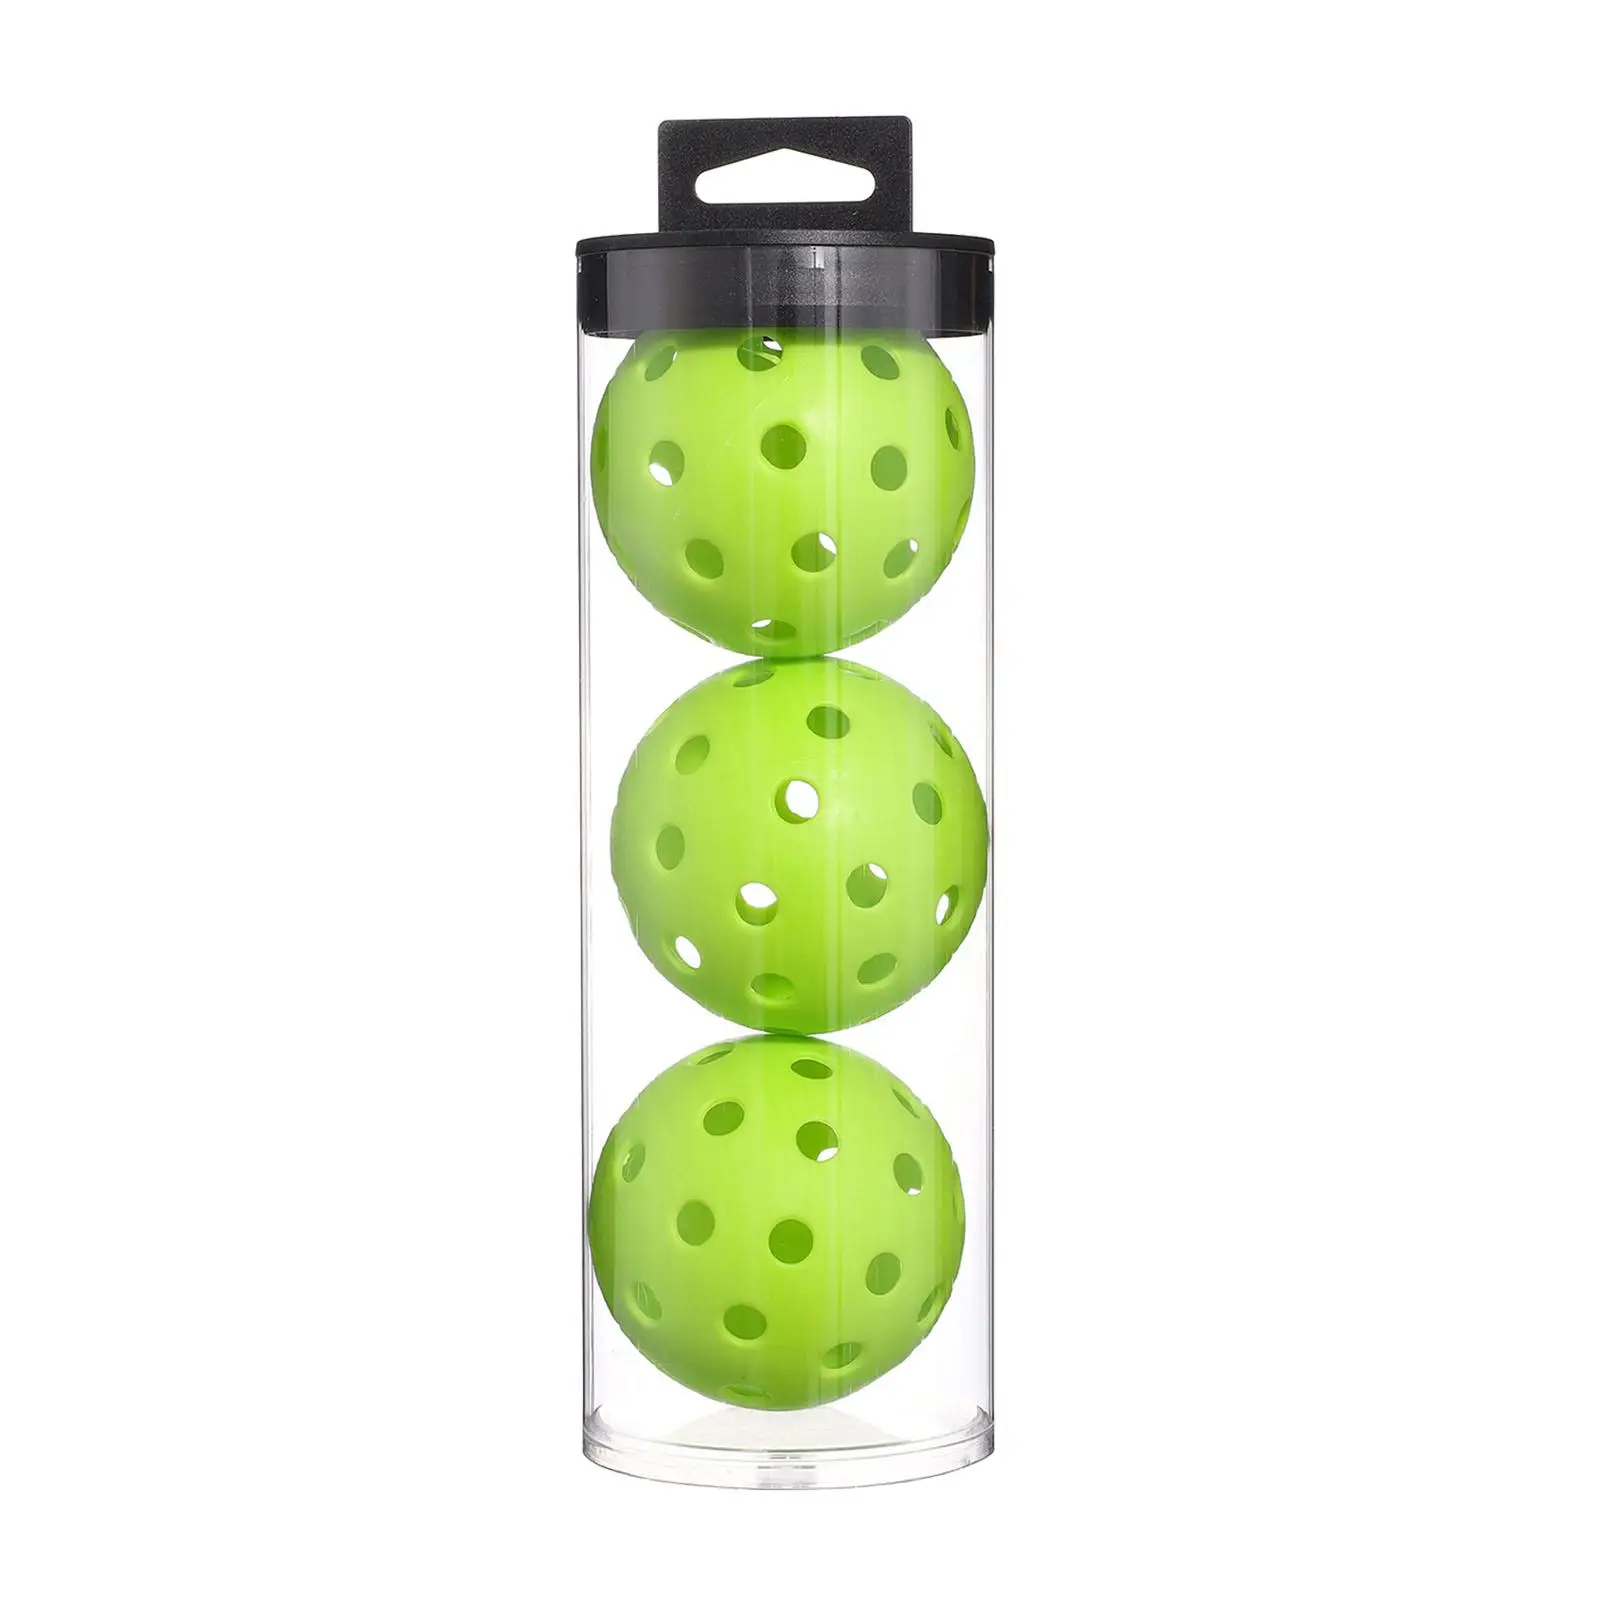 3 Pieces Pickleball Ball Flexible Lightweight 74mm Pickleball Balls for Outdoor Indoor Training Practice Adult Tournament Play